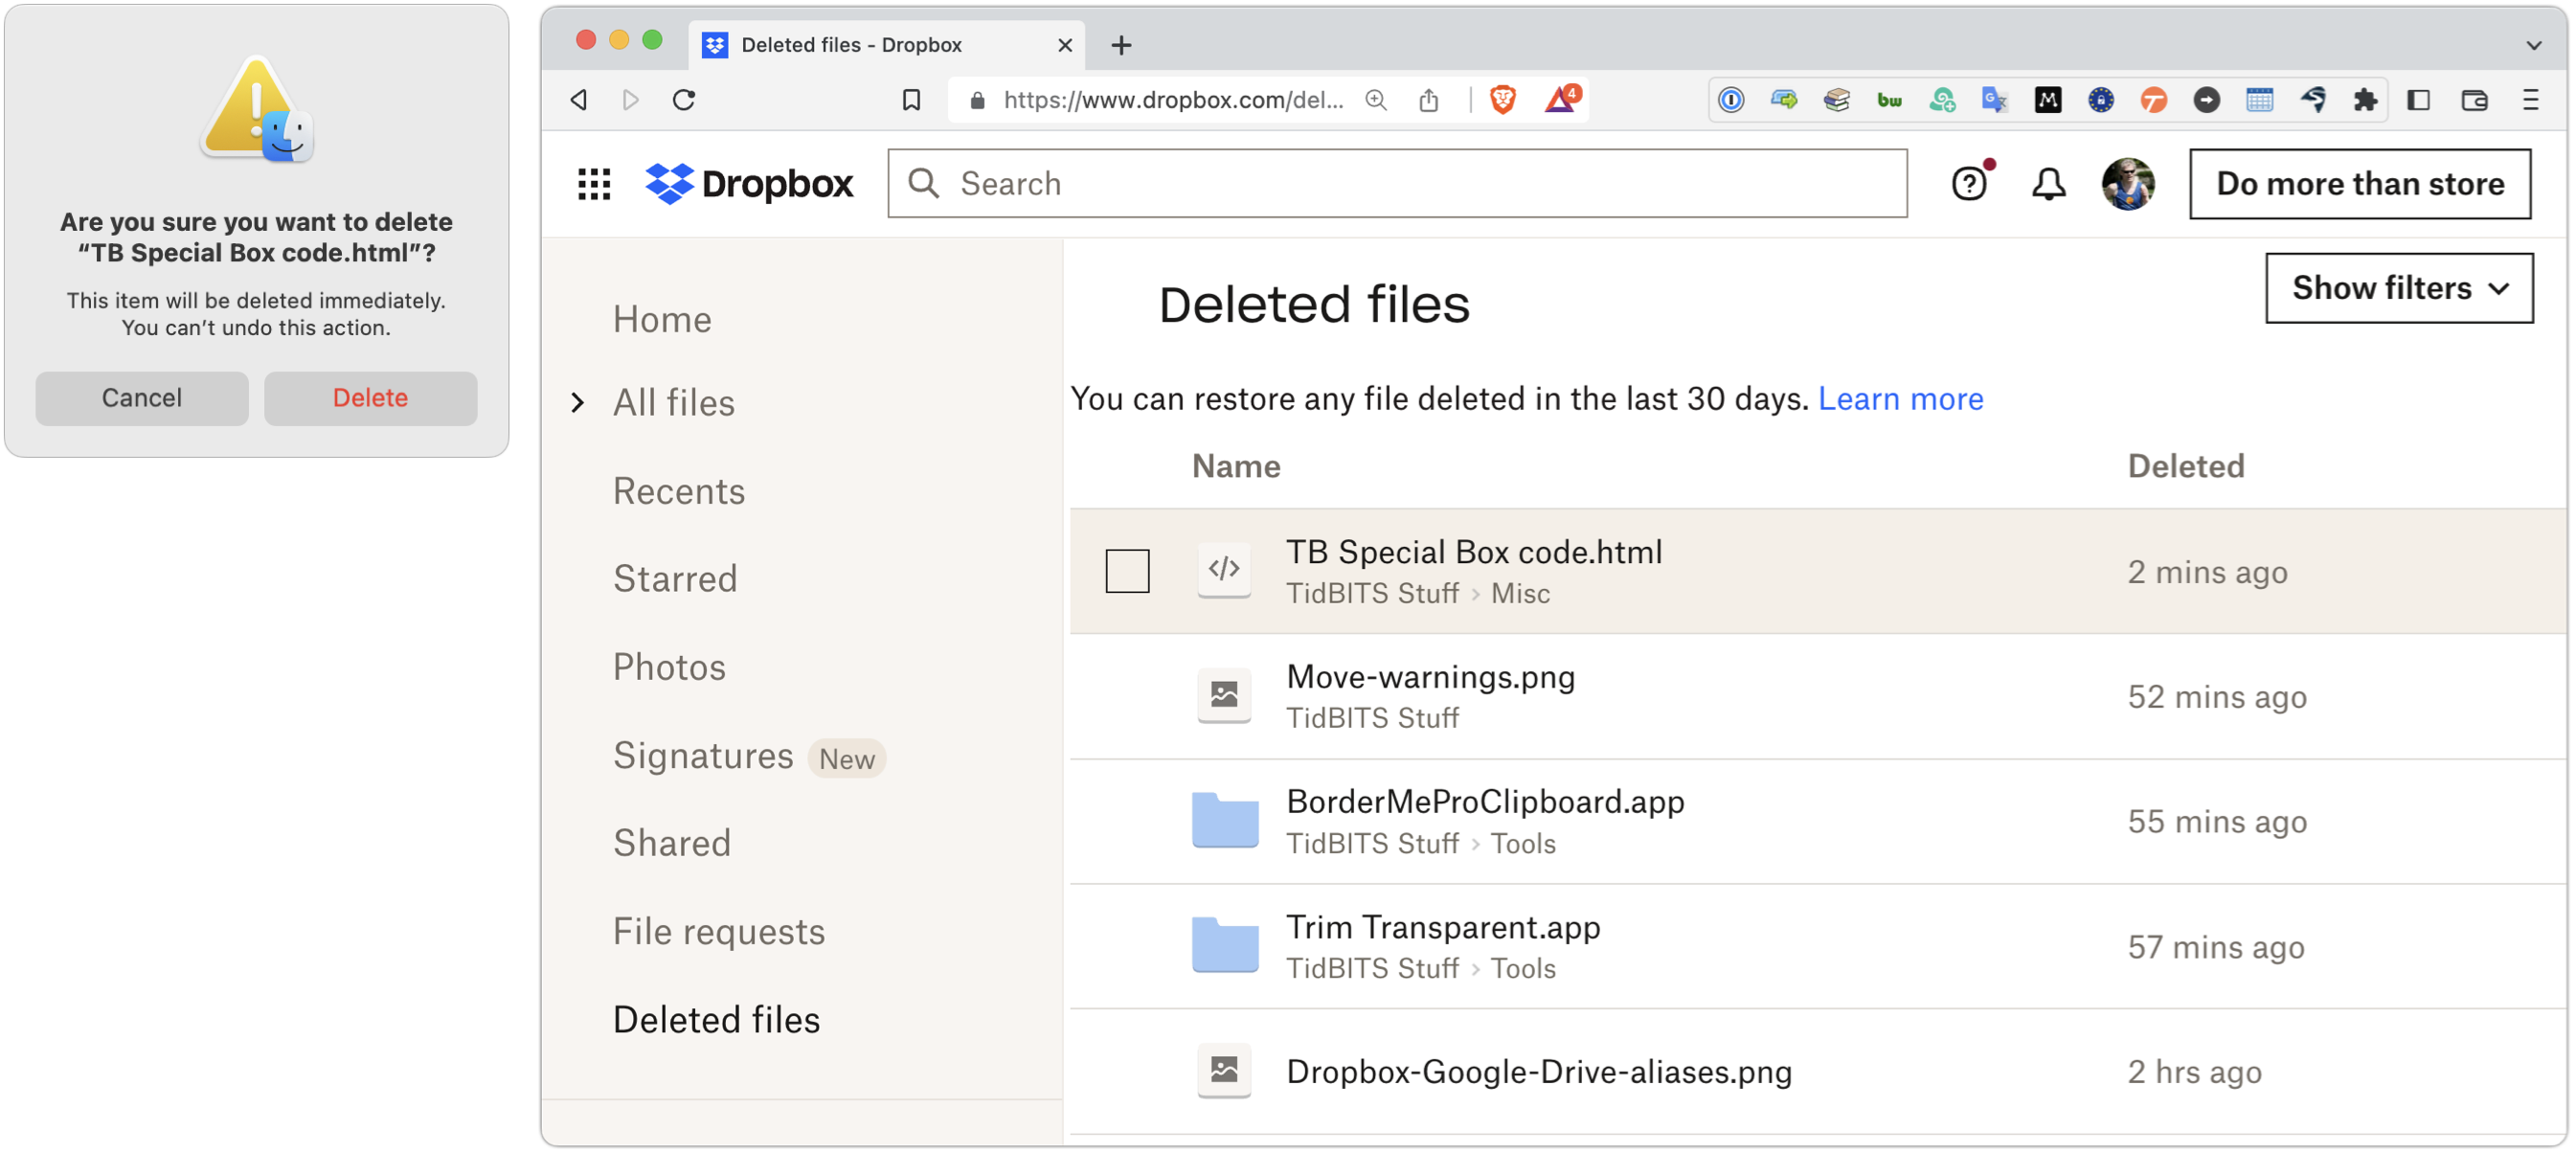 Deleting files in Dropbox